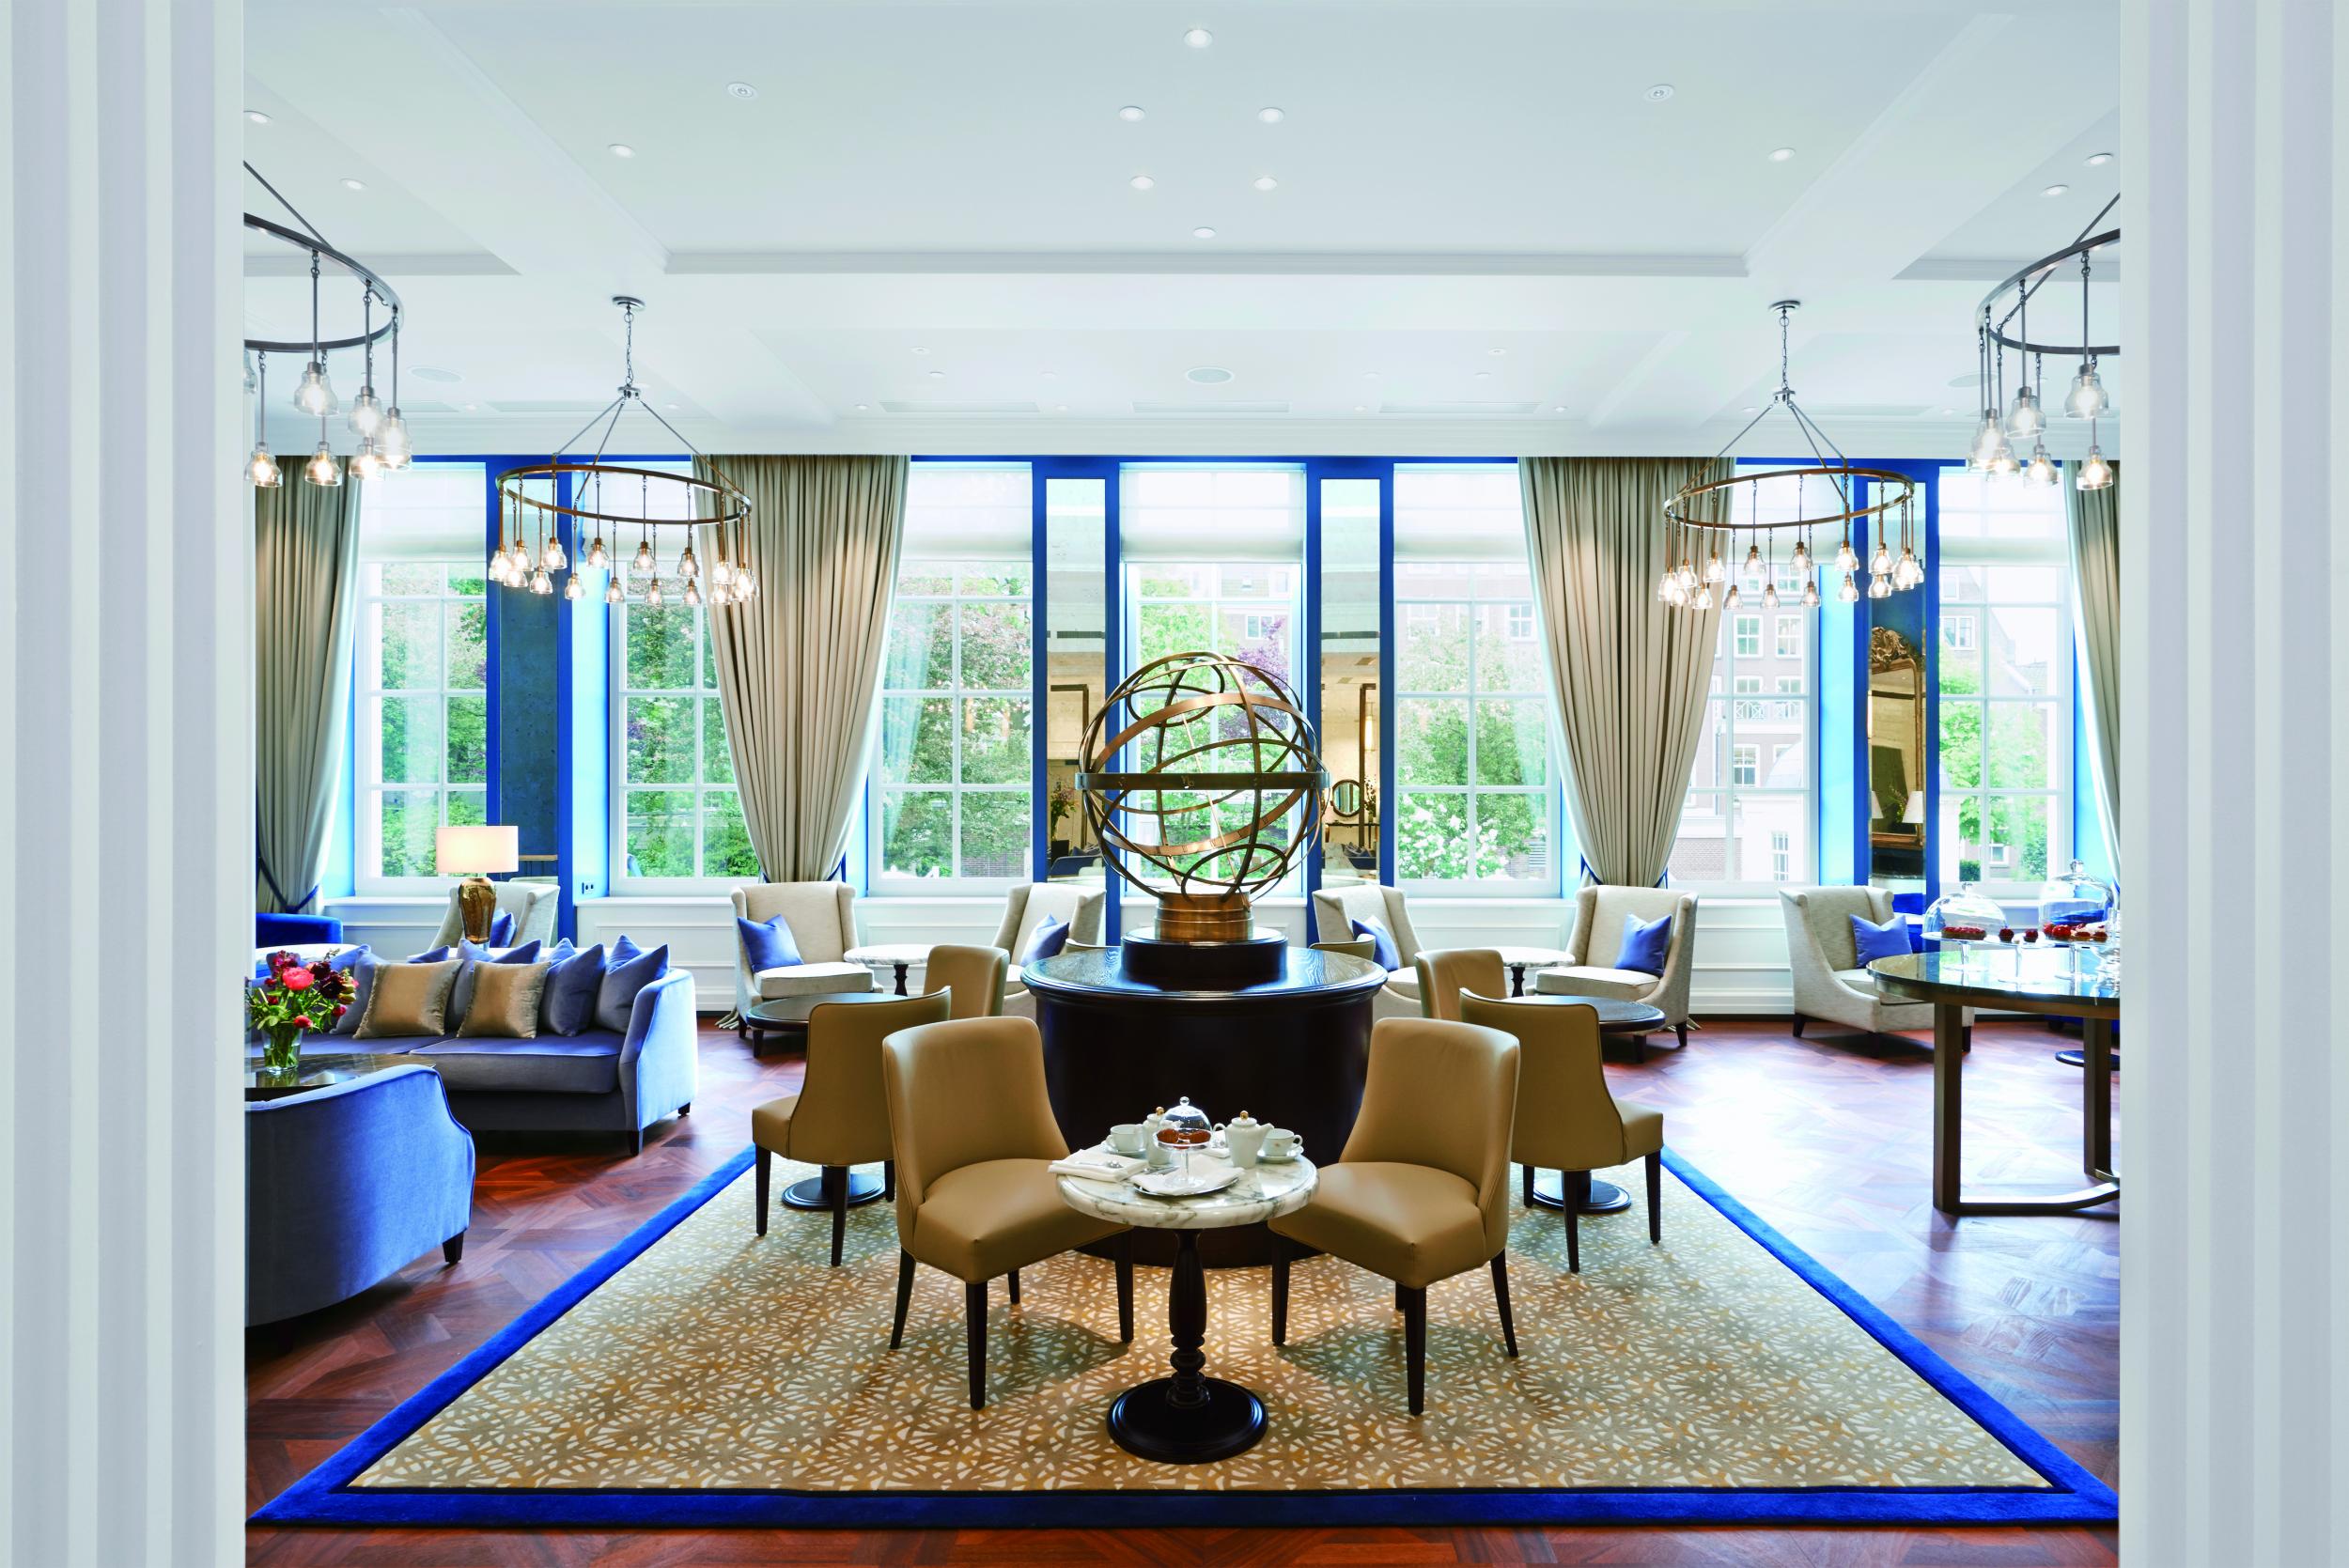 Waldorf Astoria Amsterdam has a Michelin-starred restaurant and original features